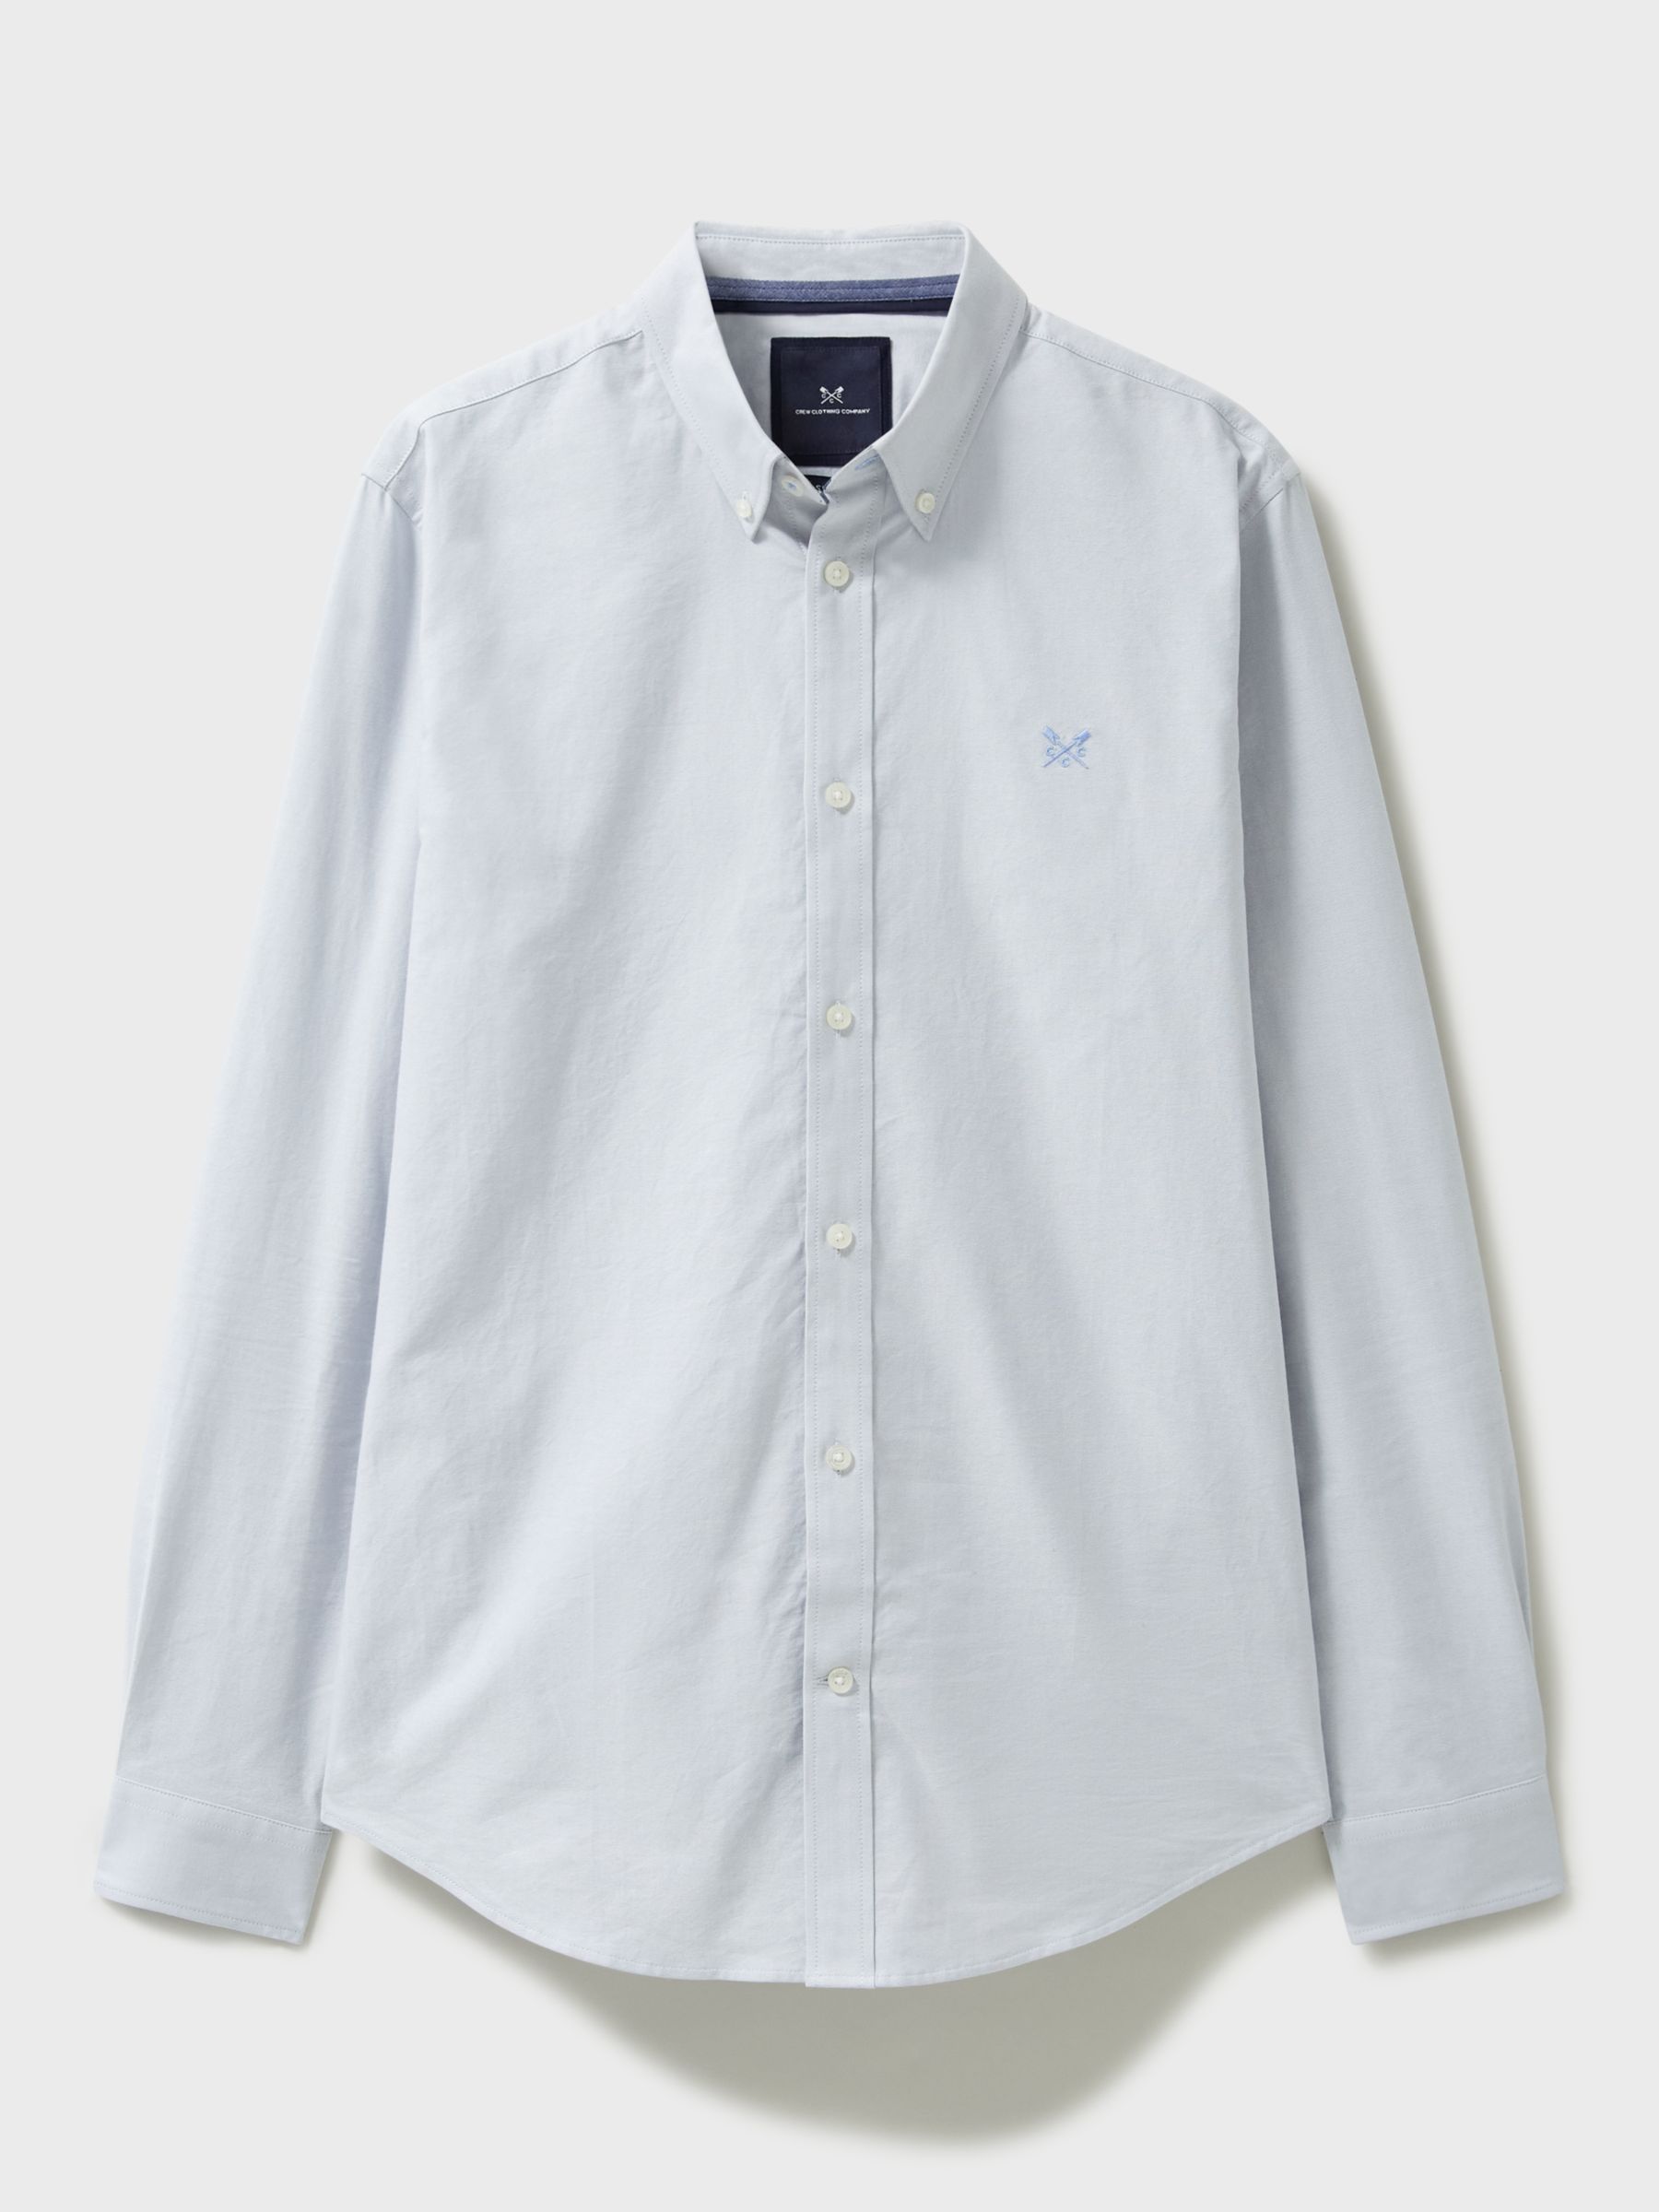 Crew Clothing Oxford Cotton Shirt, Light Grey, M